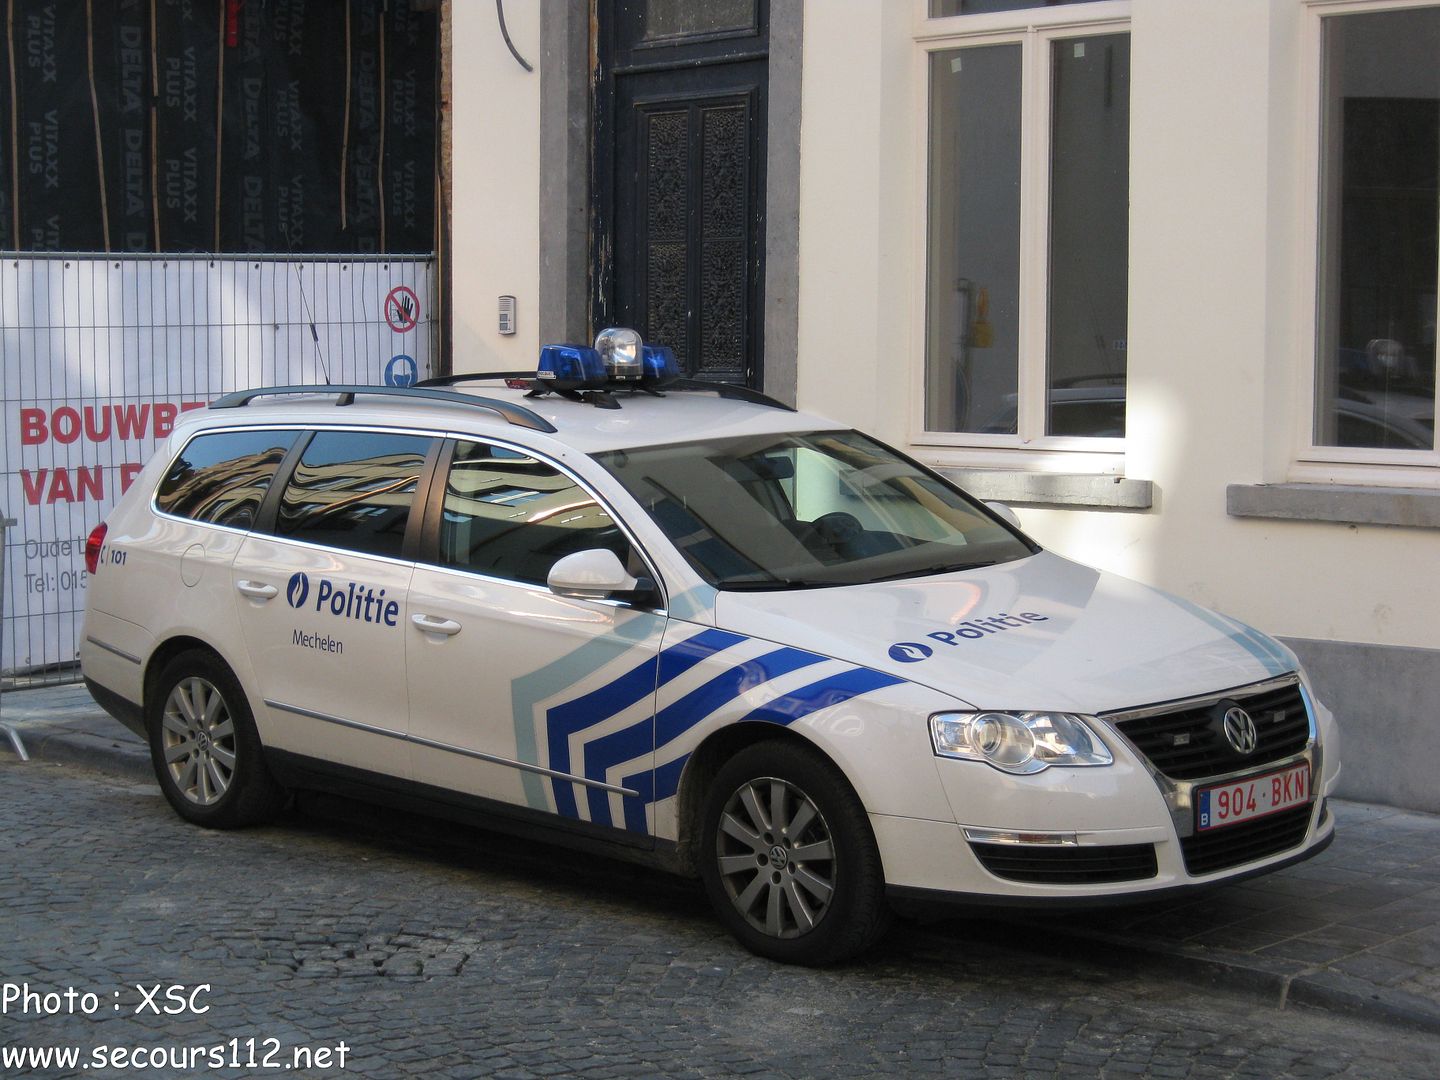 Politie Mechelen - Police Malines PassatMechelenMaanrock2011243_tn